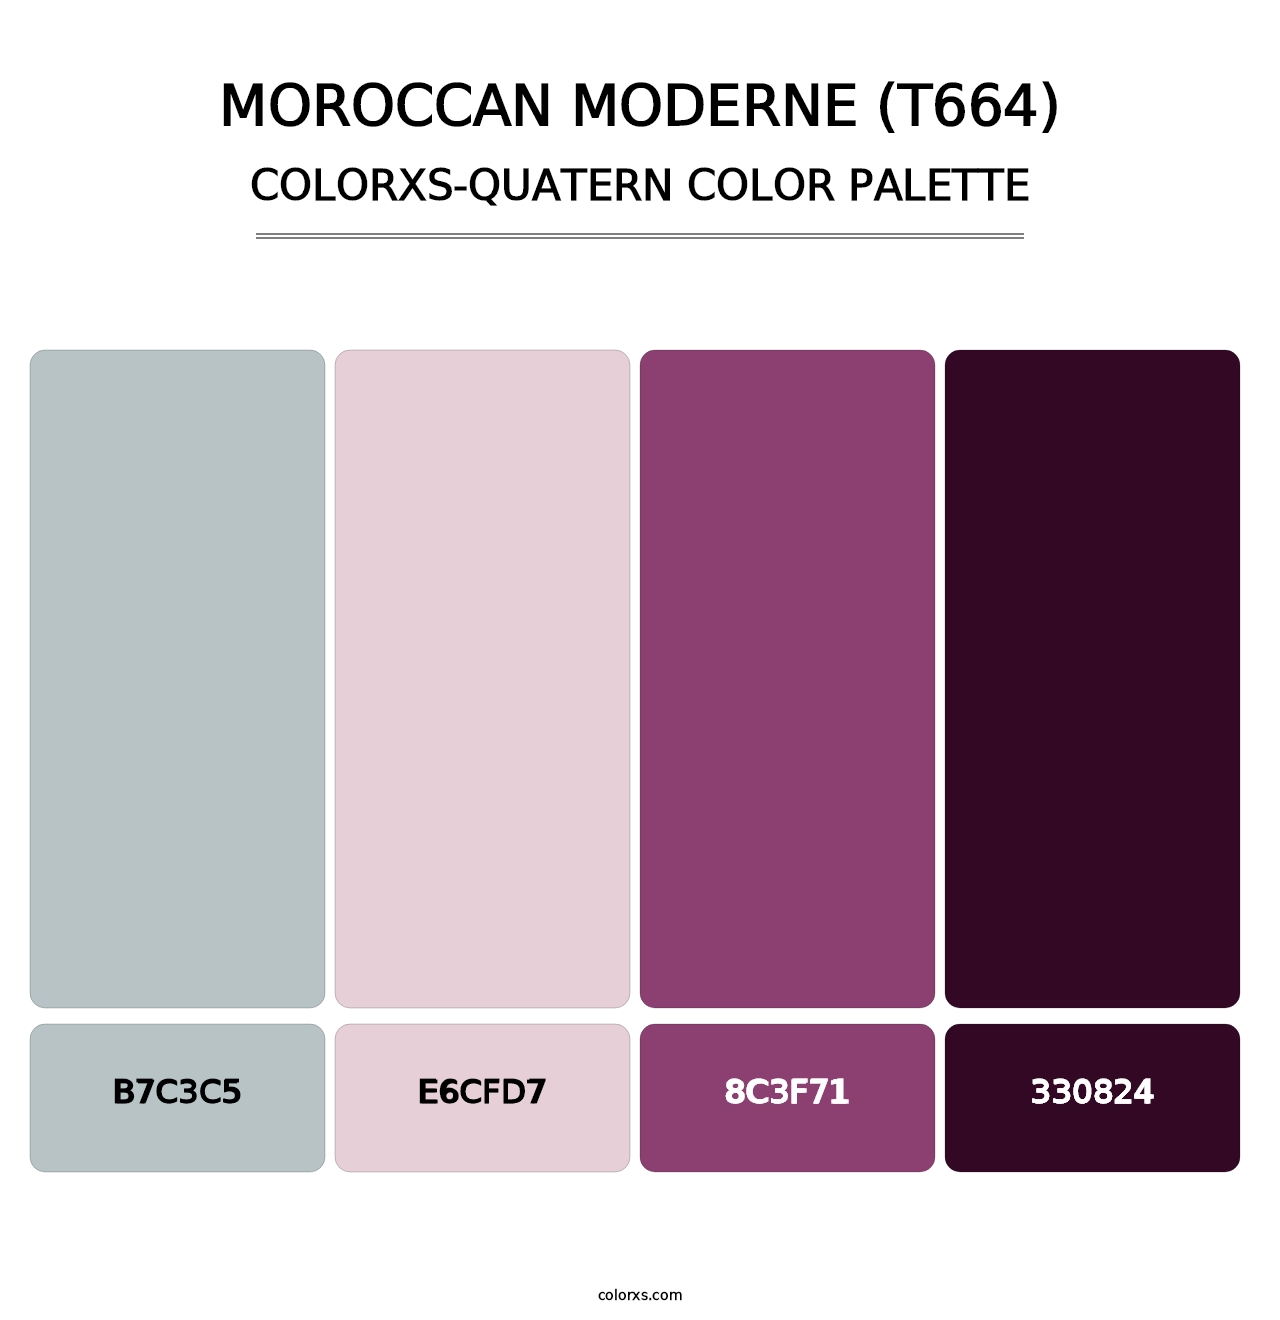 Moroccan Moderne (T664) - Colorxs Quatern Palette